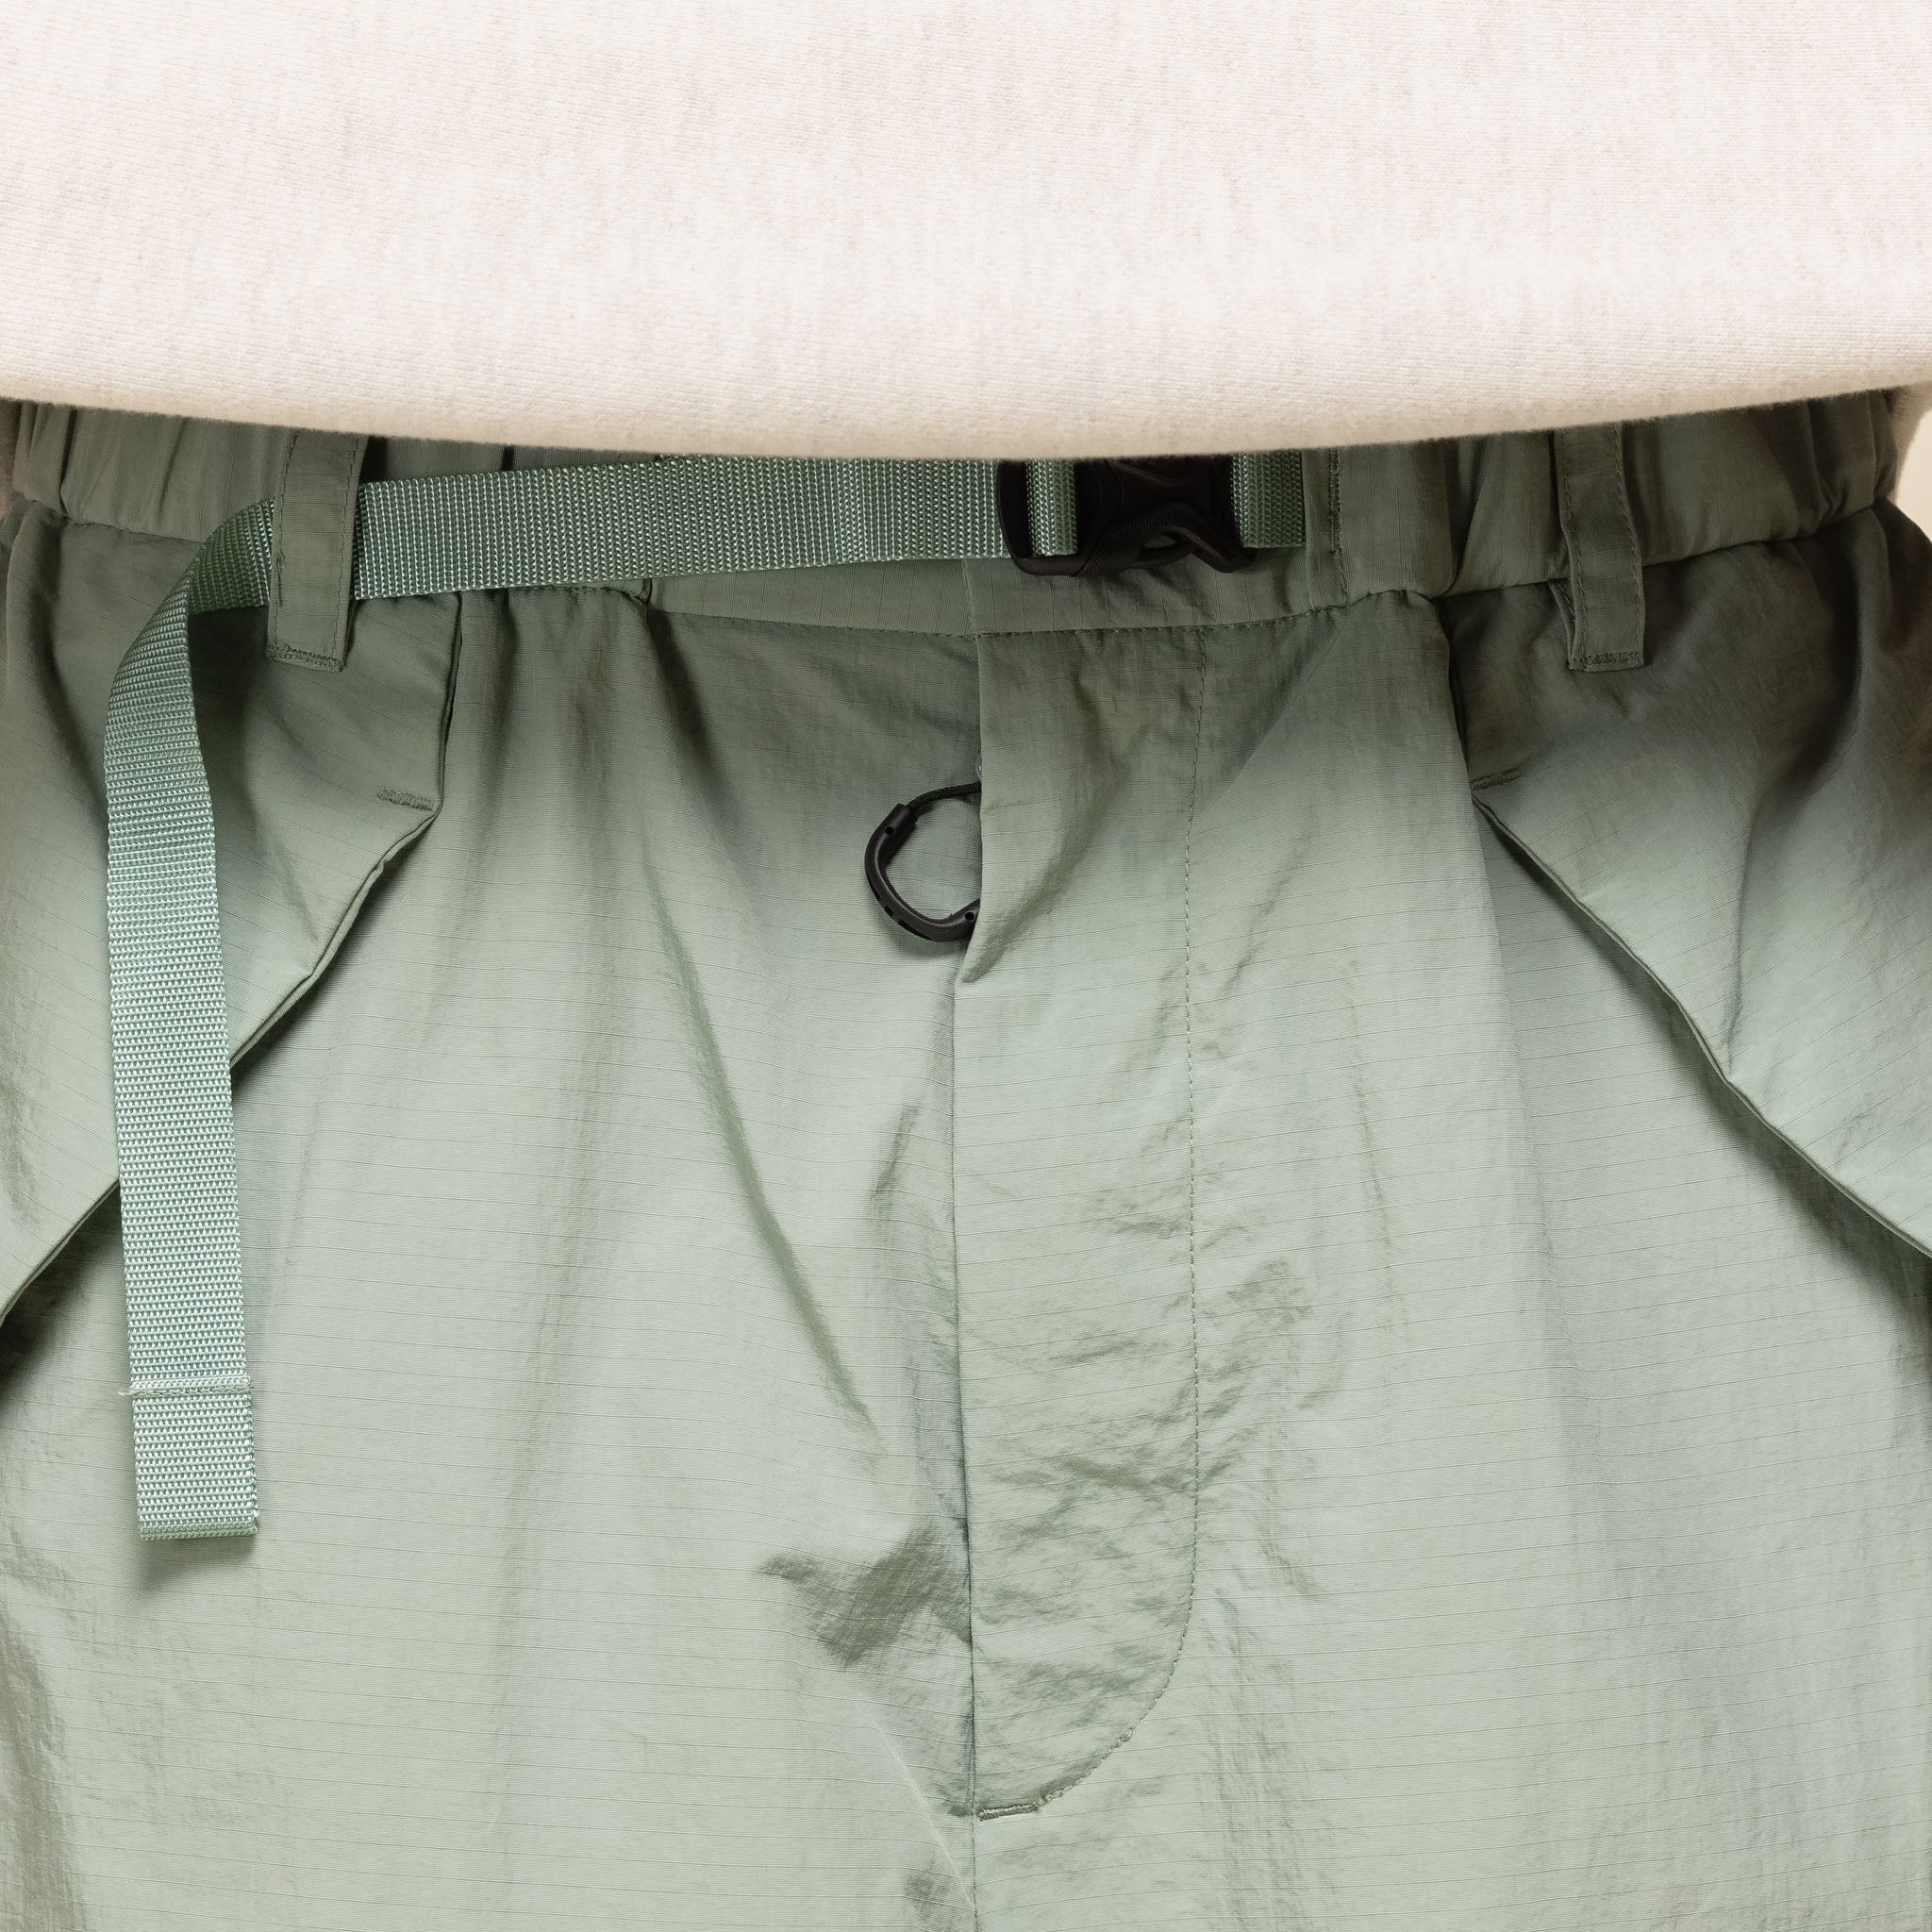 CMF Comfy Outdoor Garment - M65 Detachable "2 Way" Pants - Light Khaki